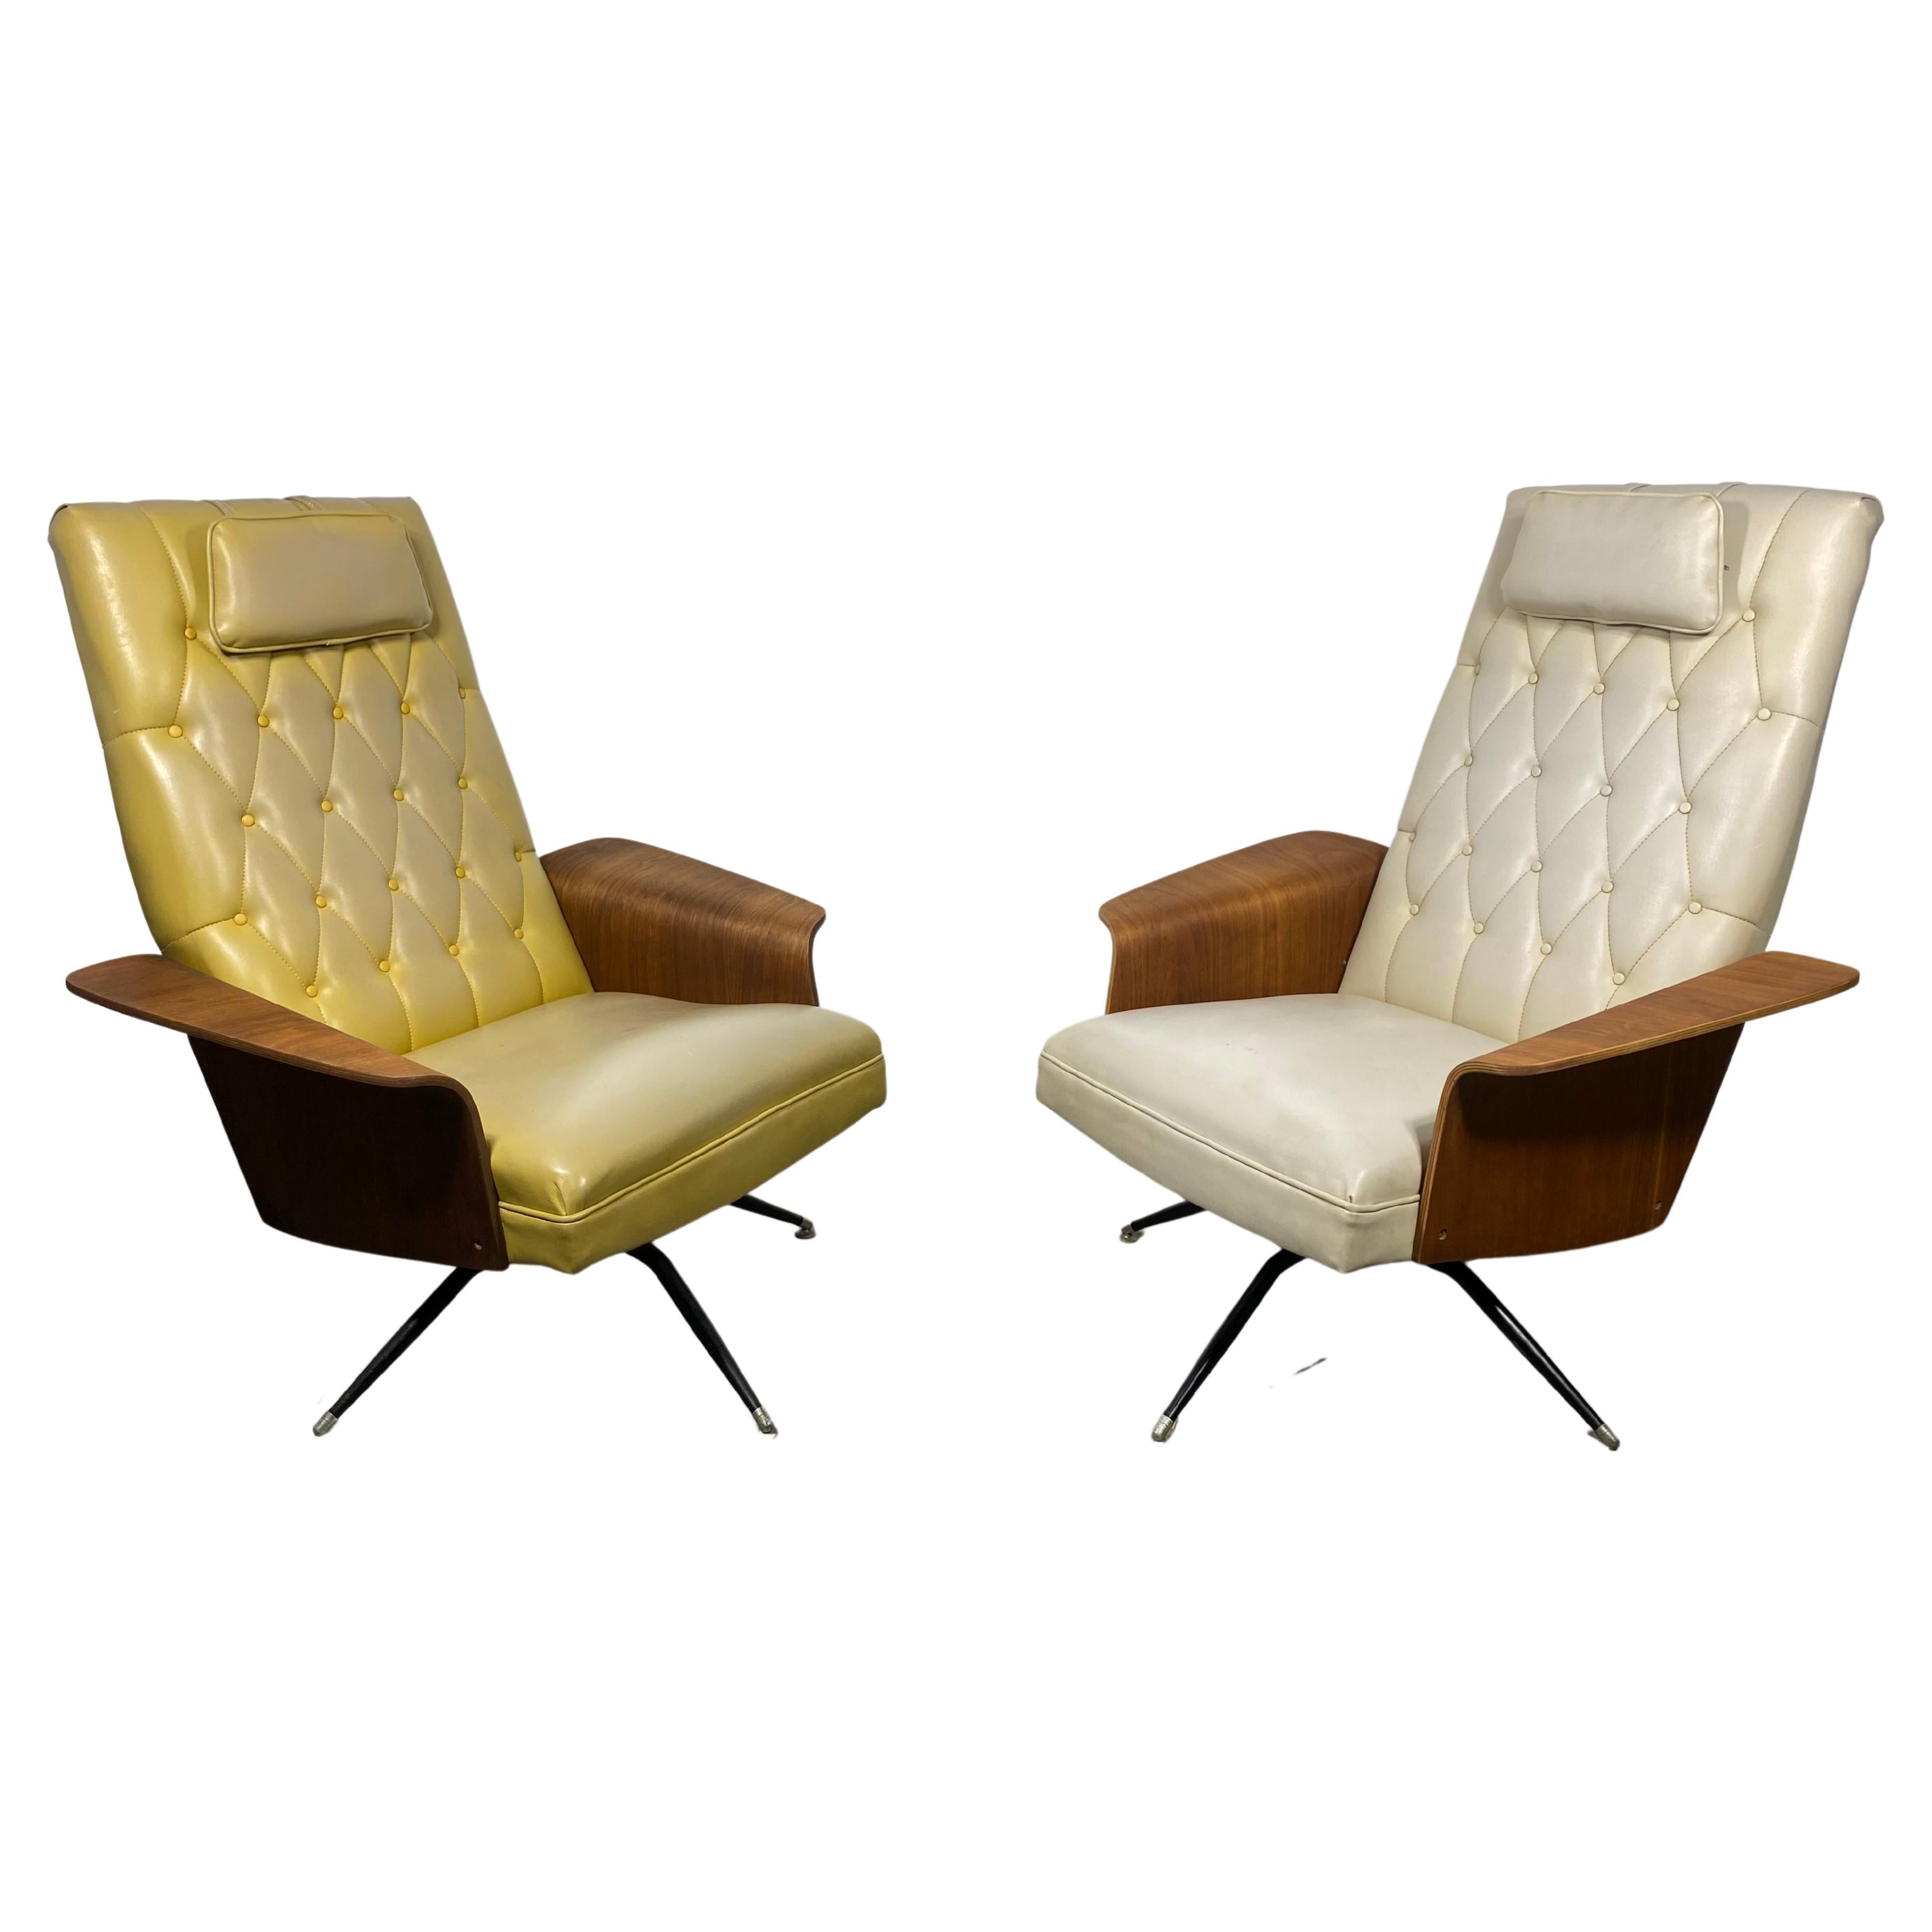 1960s Modernist Tilt / Swivel Lounge Chairs Designed by Murphy Miller, Plycraft For Sale